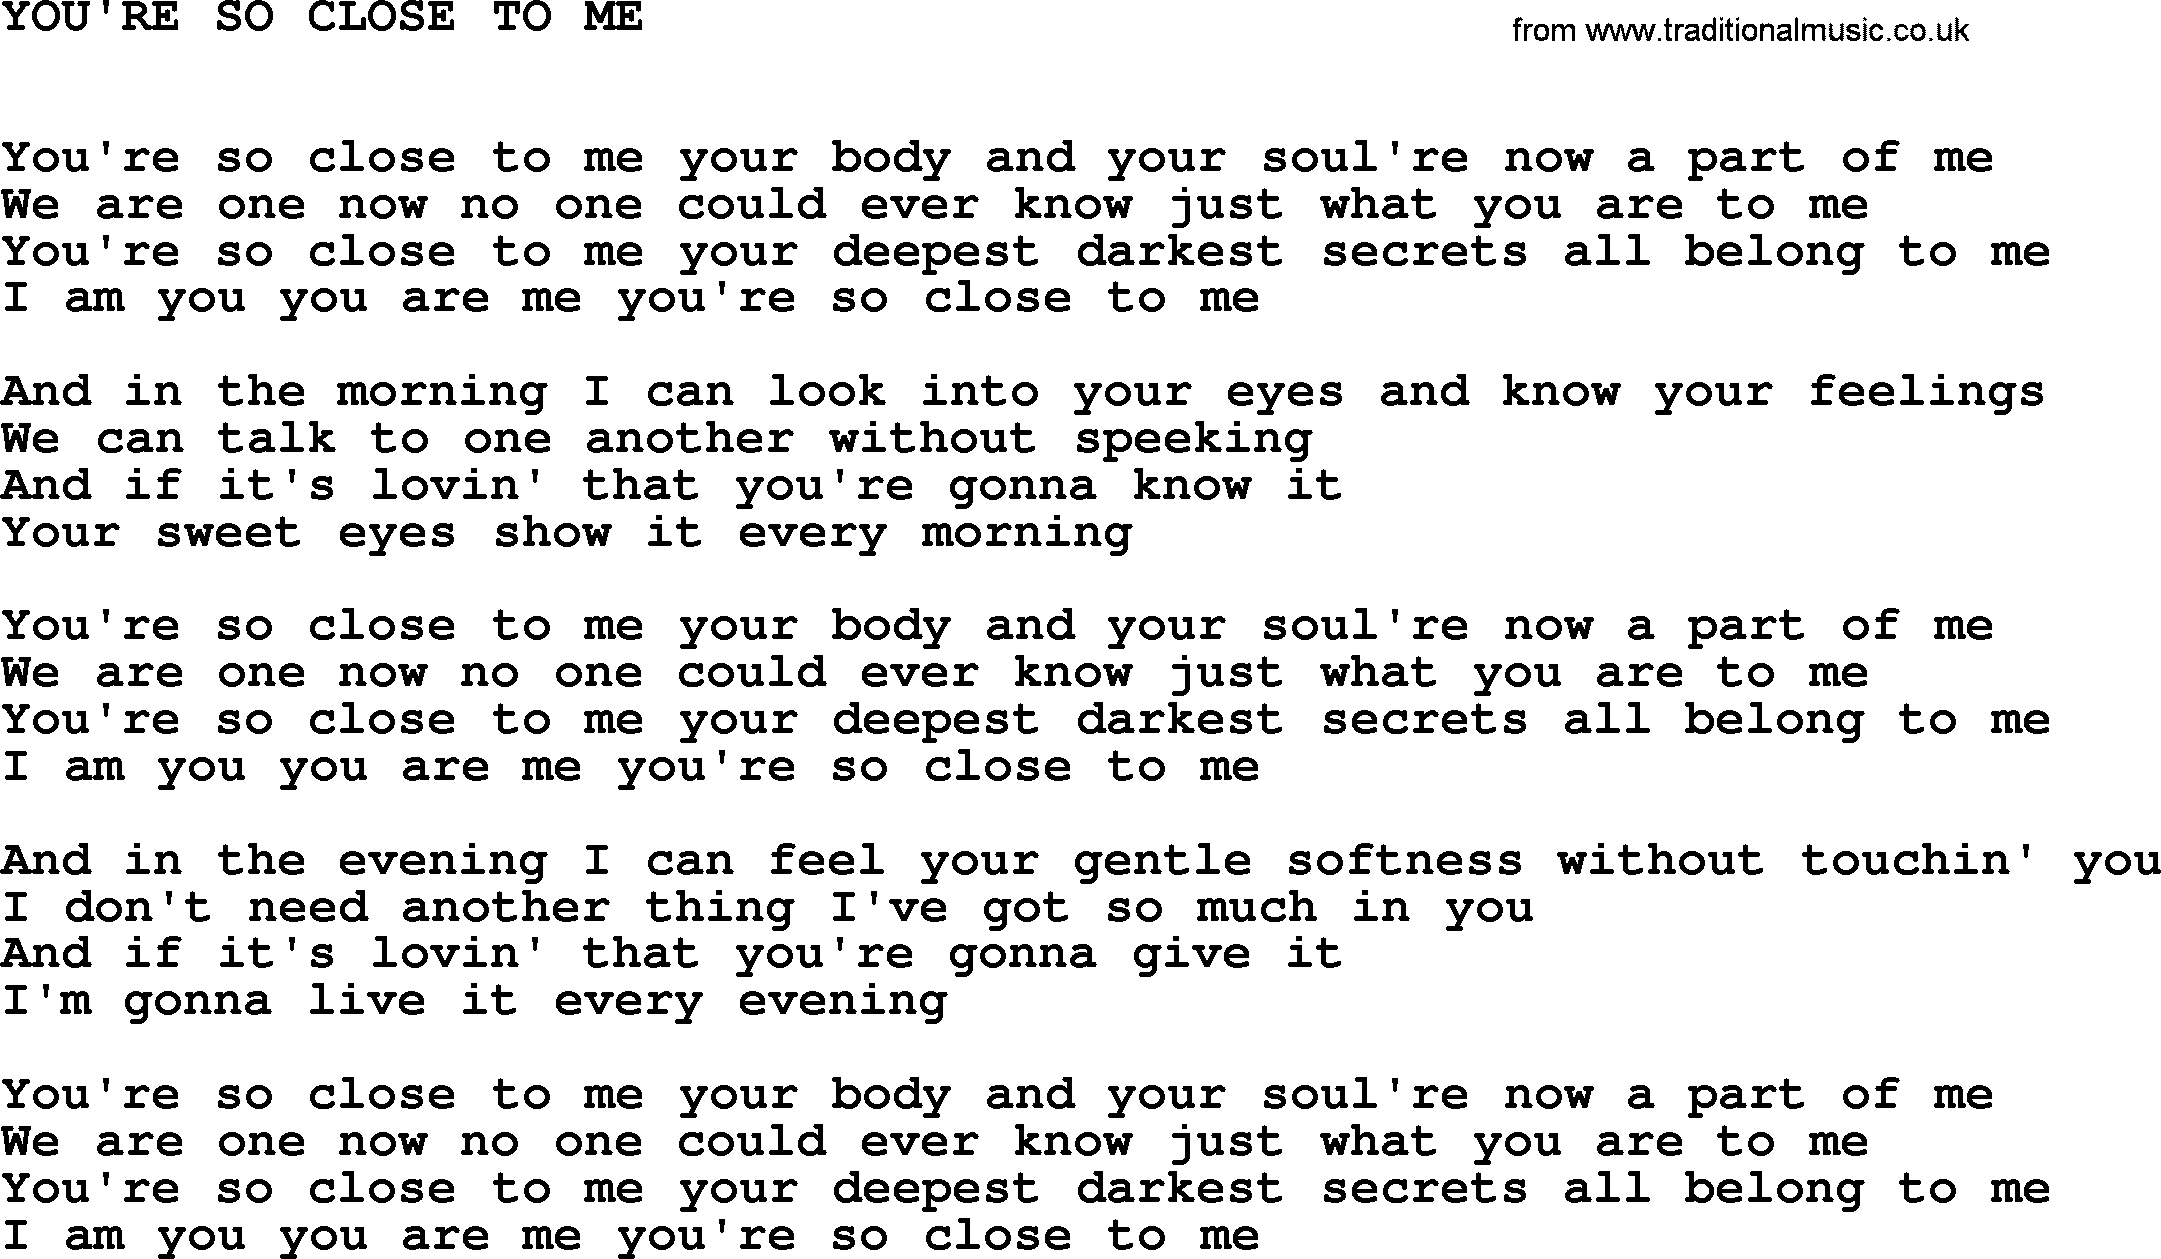 Johnny Cash song You're So Close To Me.txt lyrics